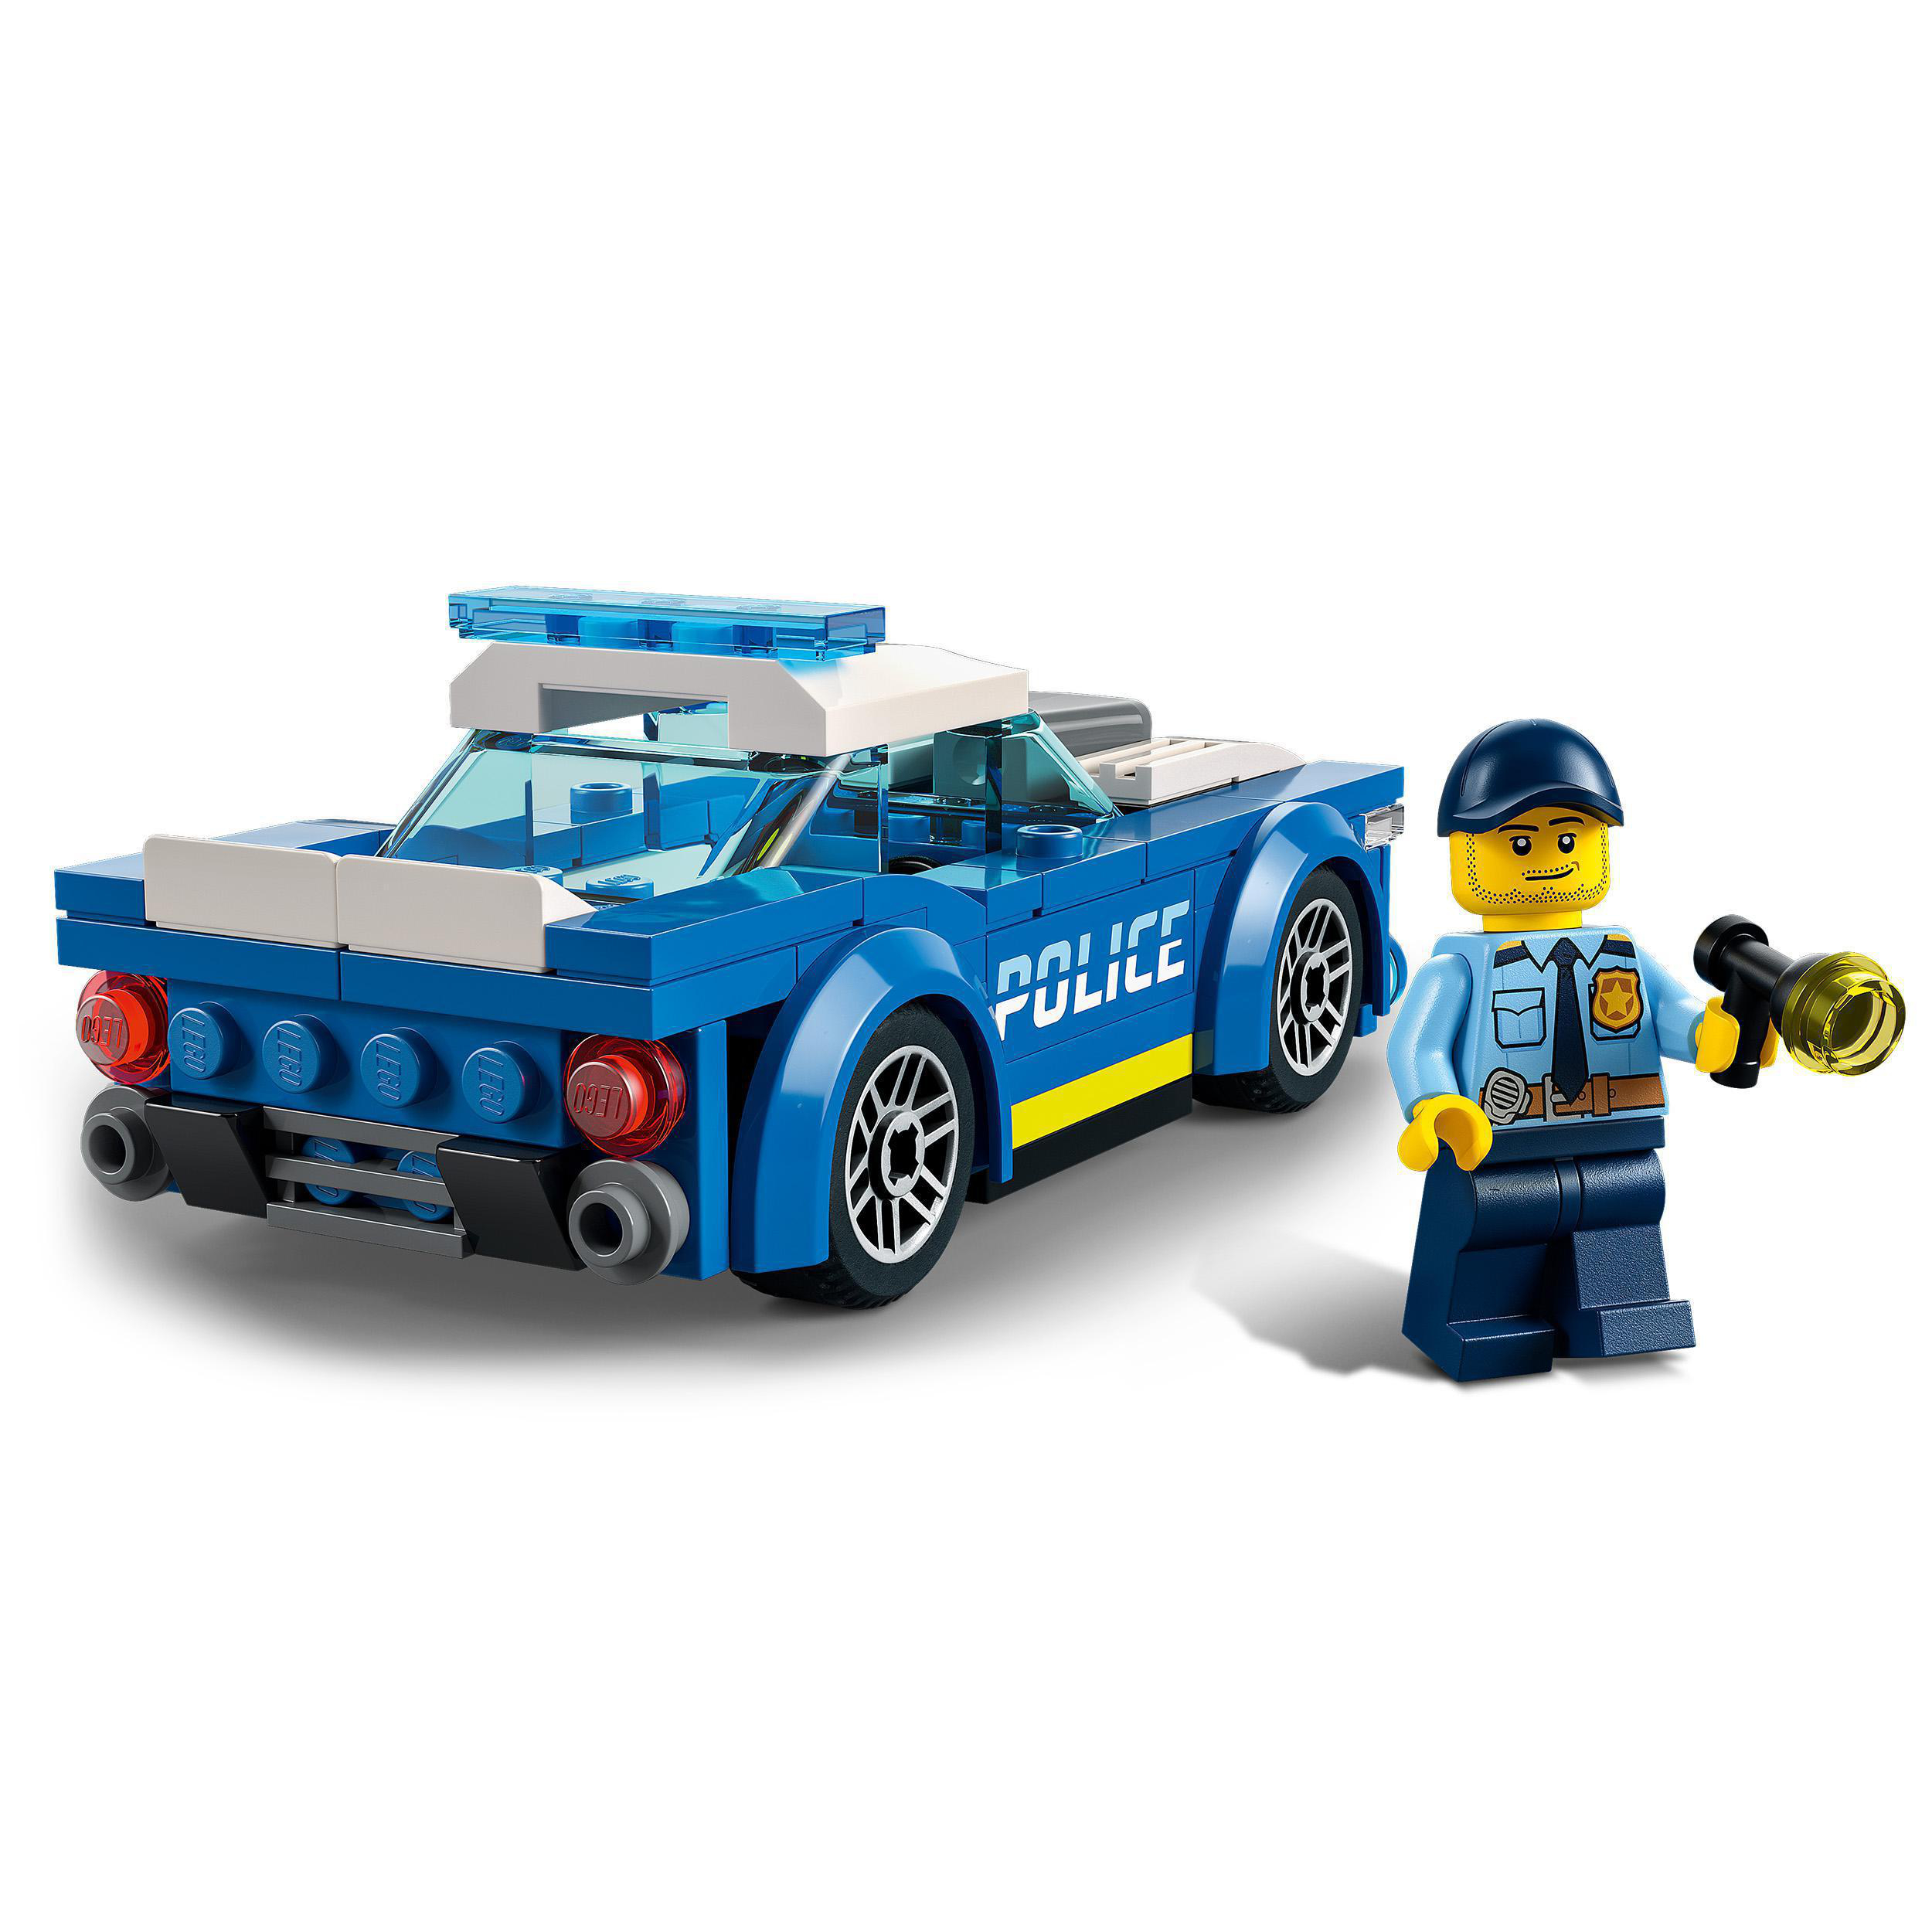 Polizeiauto Bausatz, Mehrfarbig 60312 City LEGO